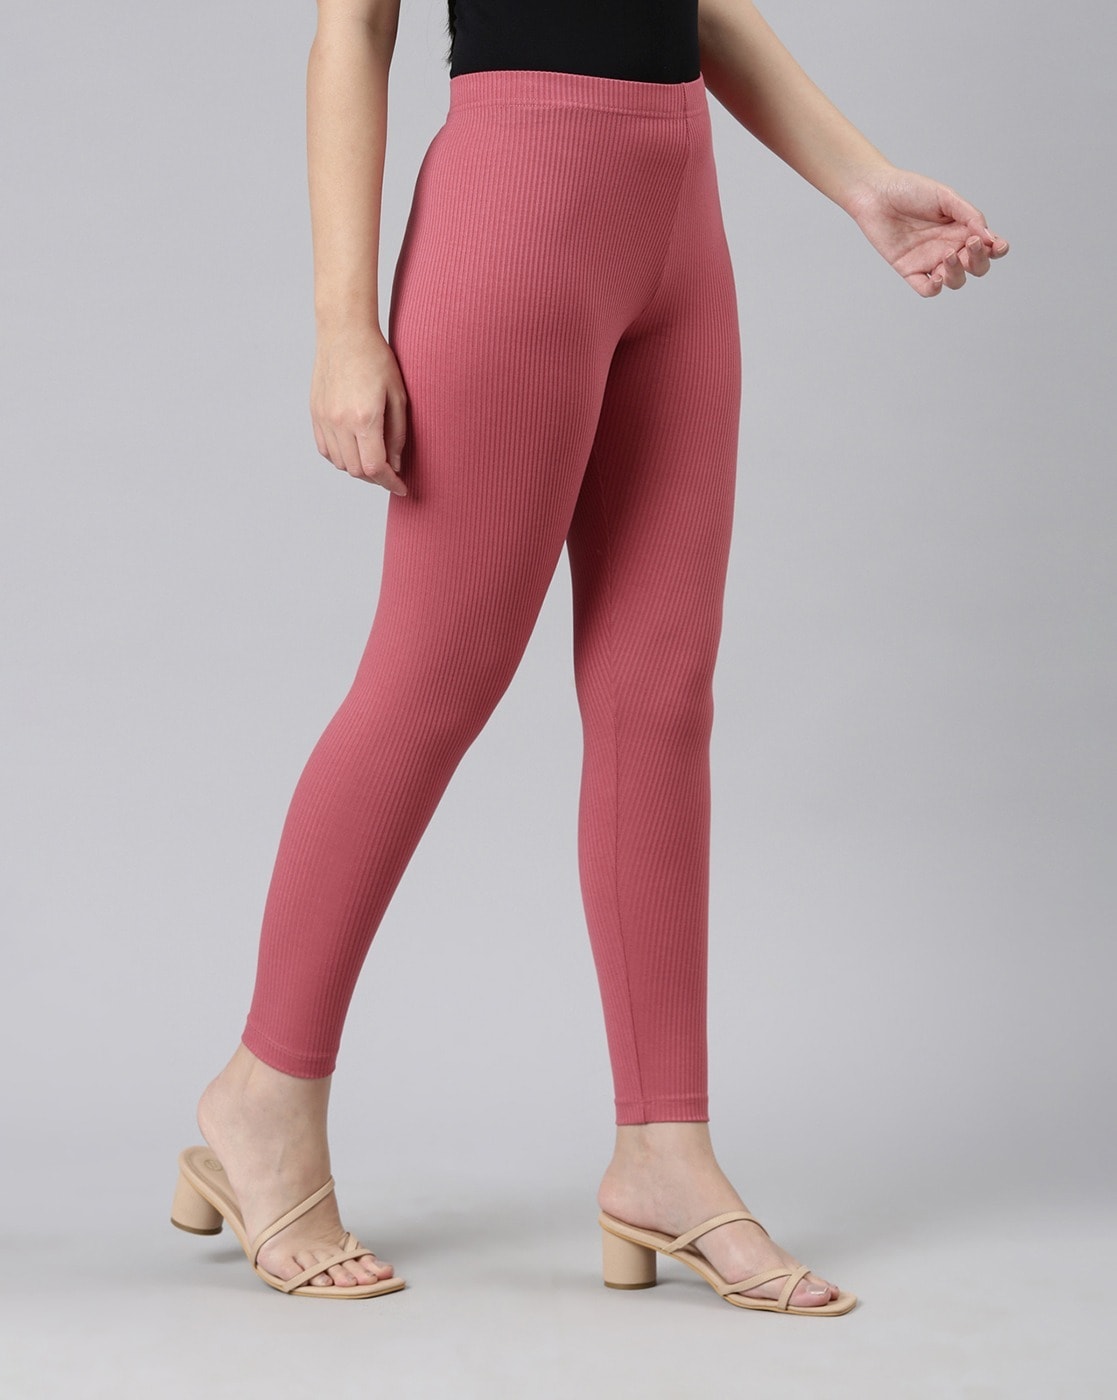 Go Colors Leggings : Buy Go Colors Women Solid Wheat Ankle Length